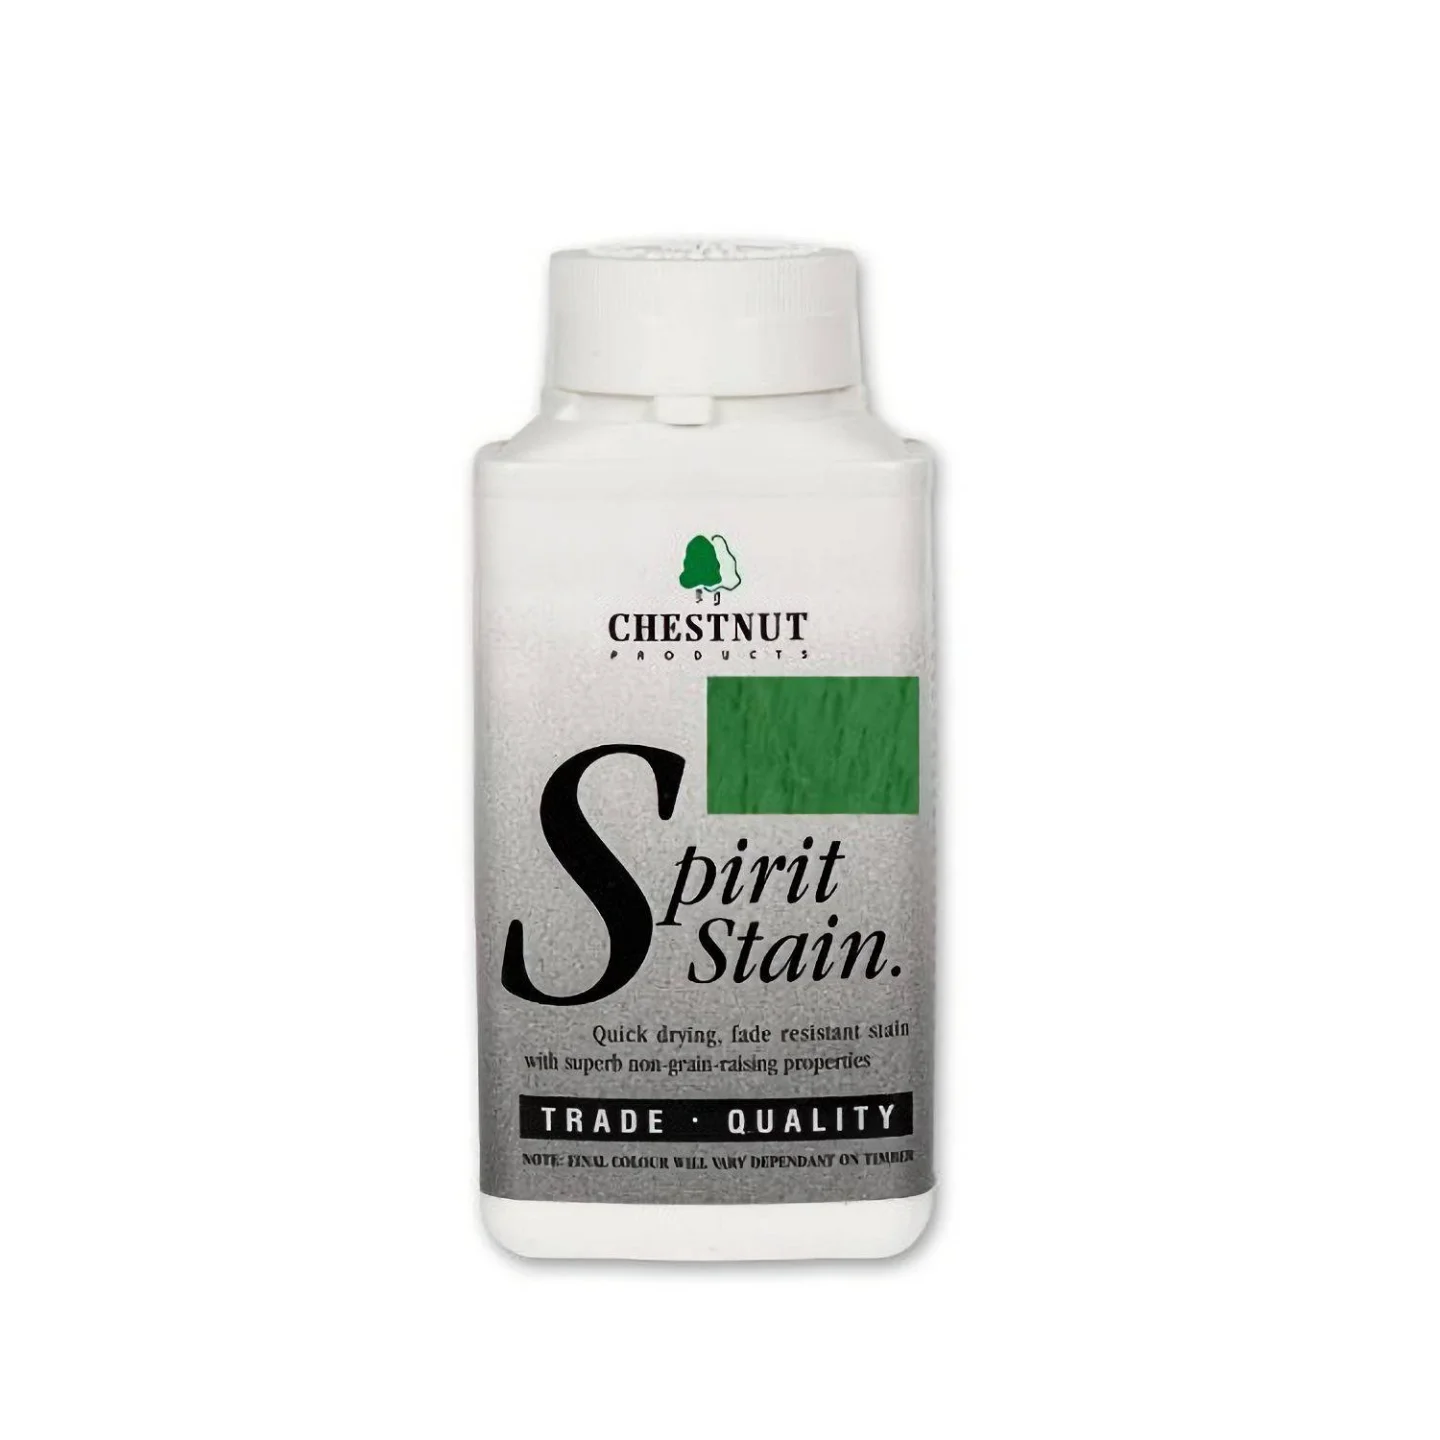 spirit-stain-groen-chestnut-250 ml.